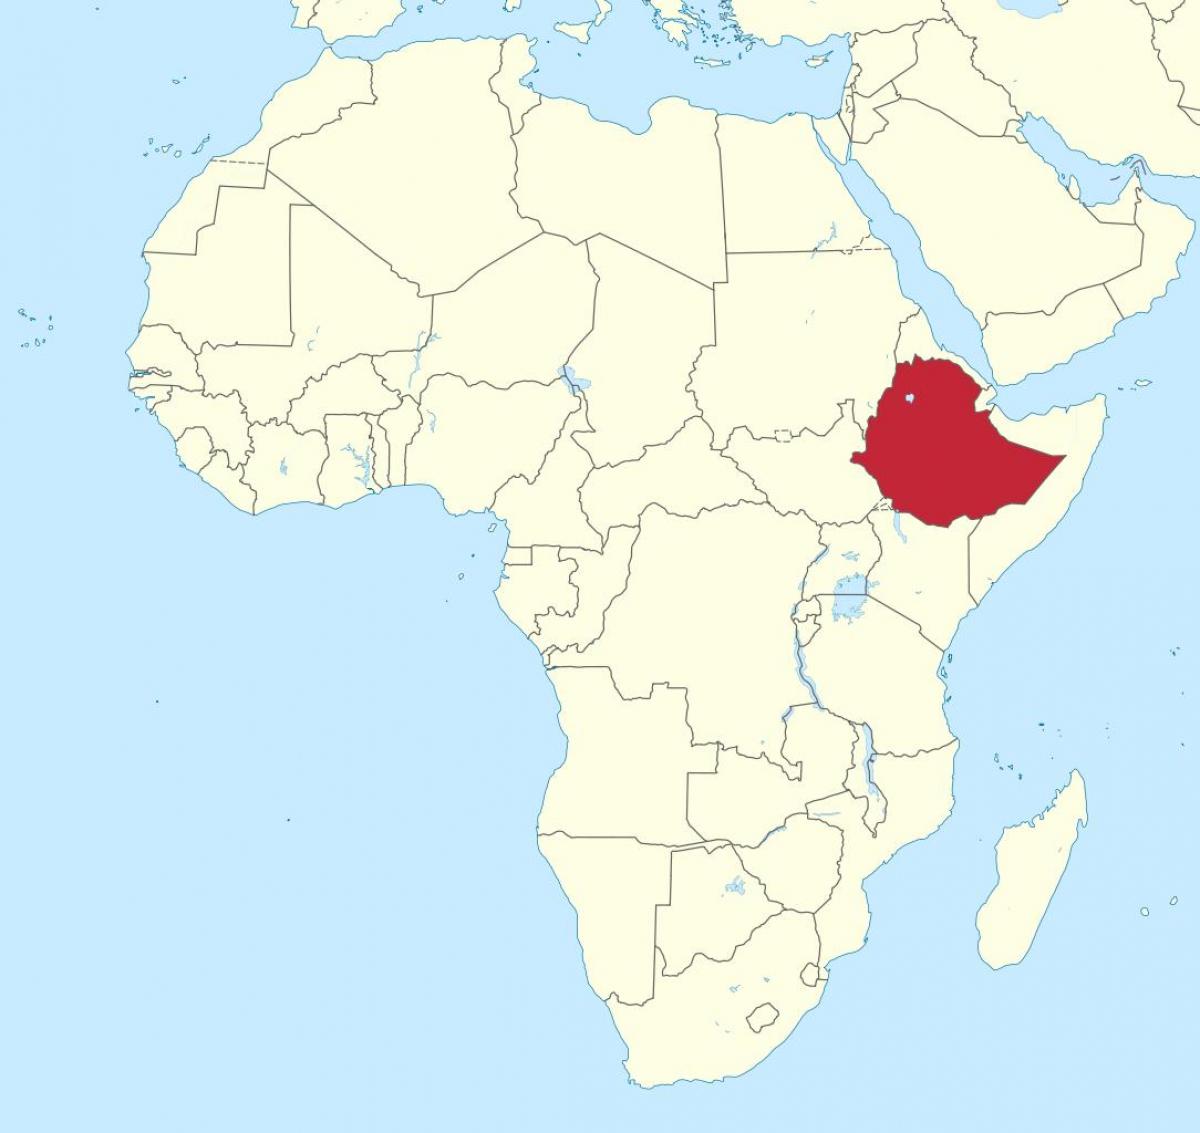 mapa de áfrica mostrando Etiopía